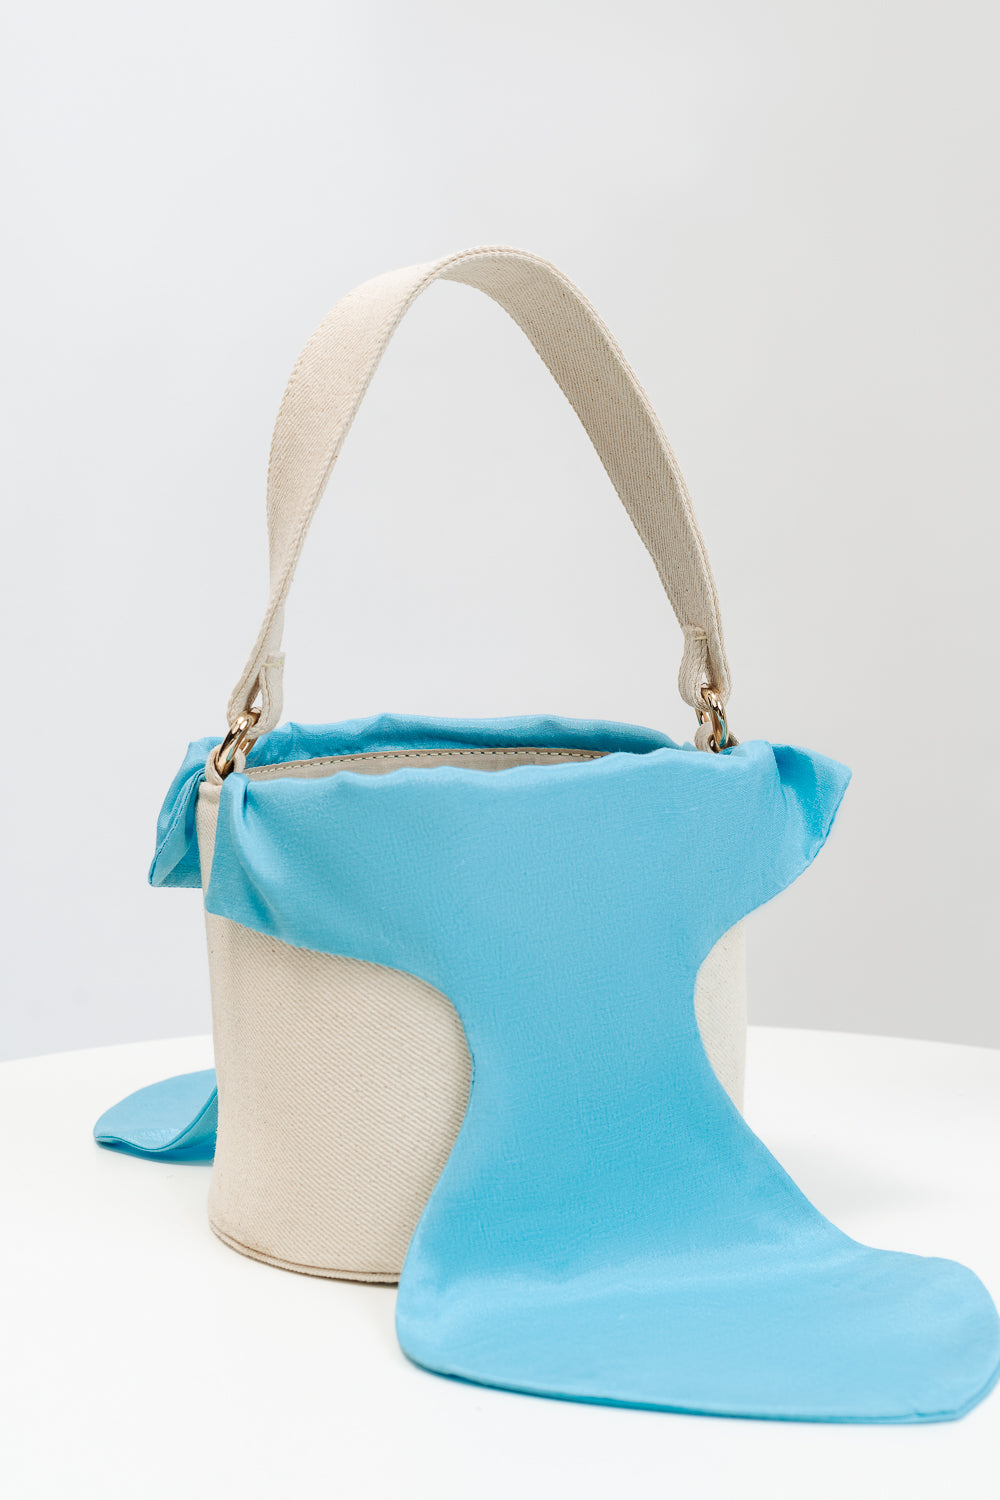 The White-Blue Bucket Bag